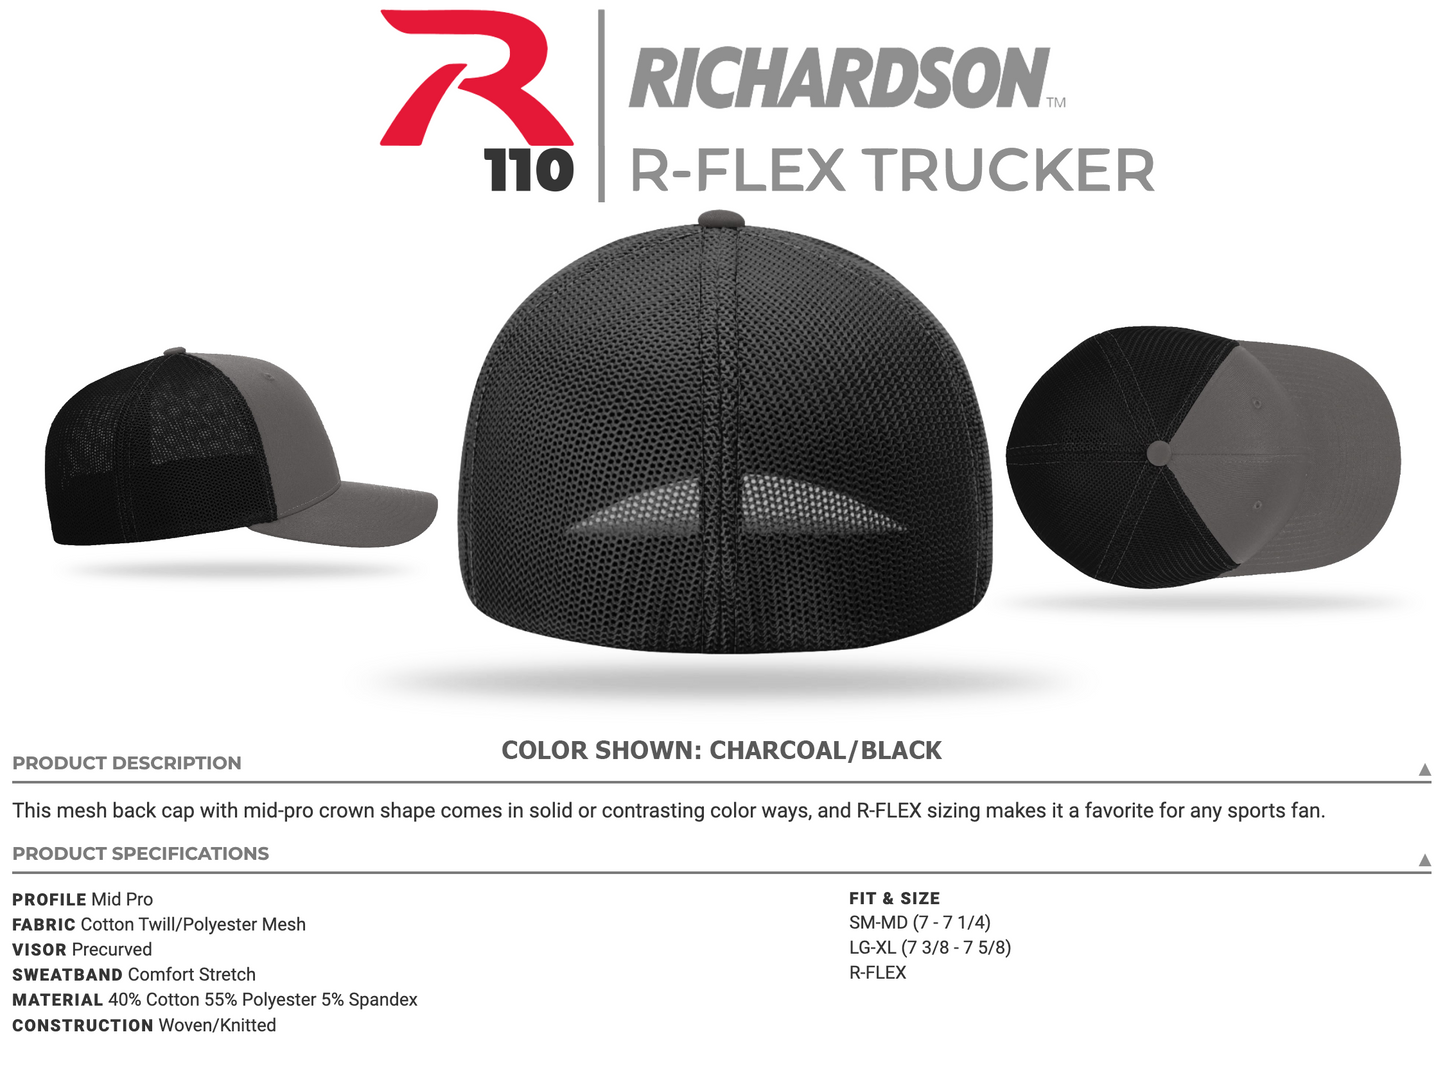 I'd Tack That R-FLEX Richardson 110 Stretch Hat